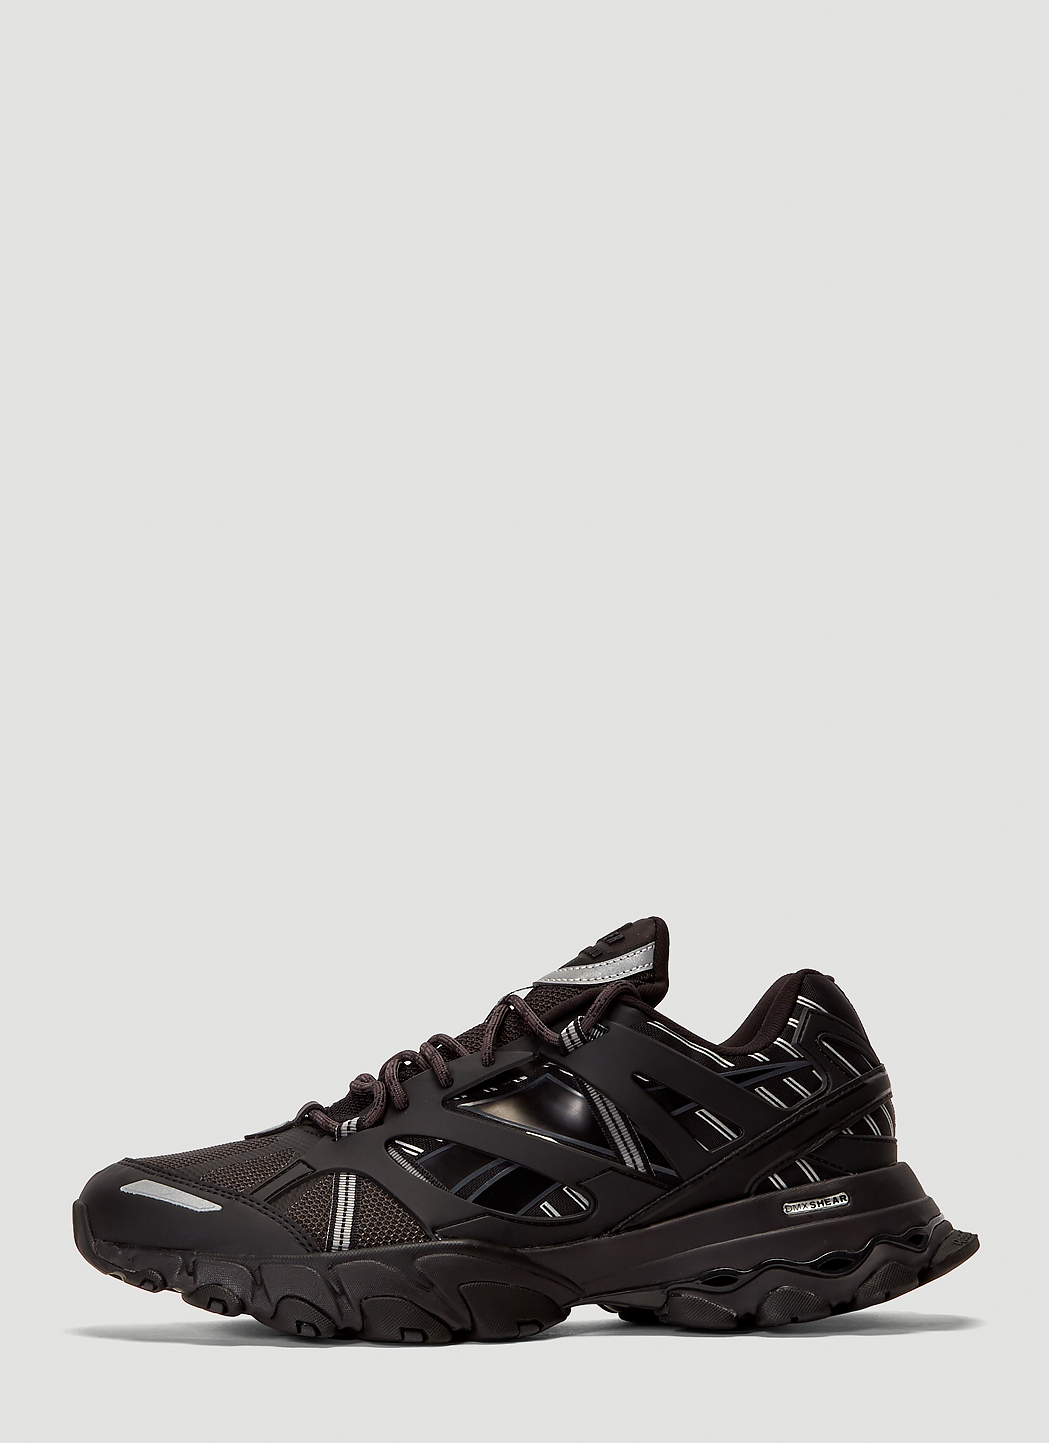 Reebok DMX Trail Shadow Sneakers in Black | LN-CC